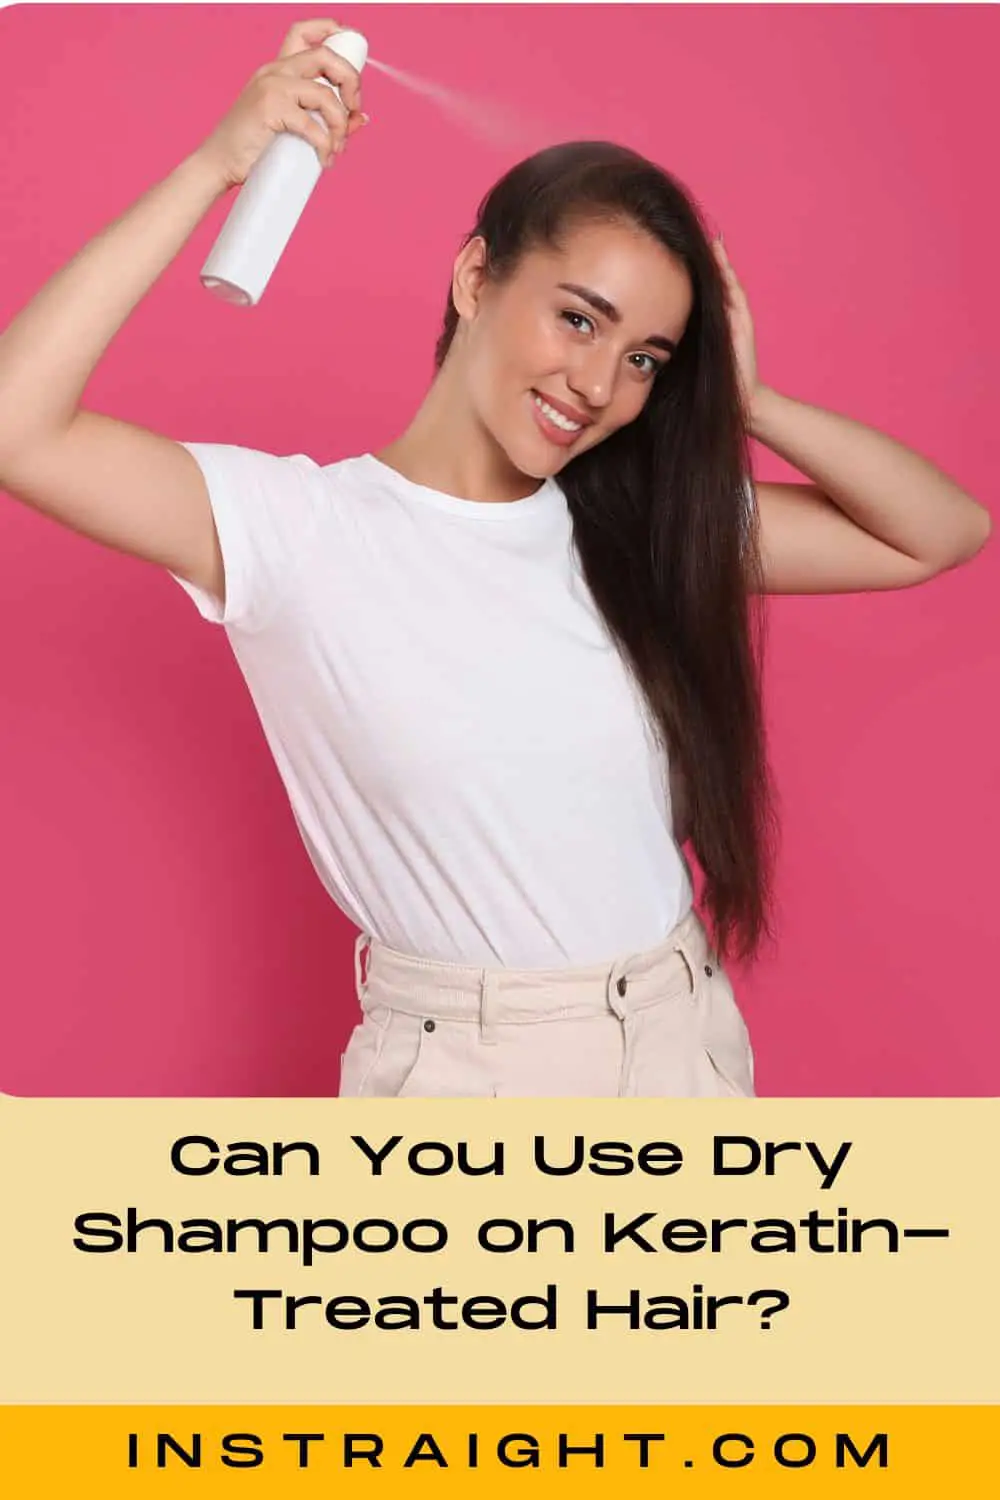 Can You Use Dry Shampoo on Keratin-Treated Hair